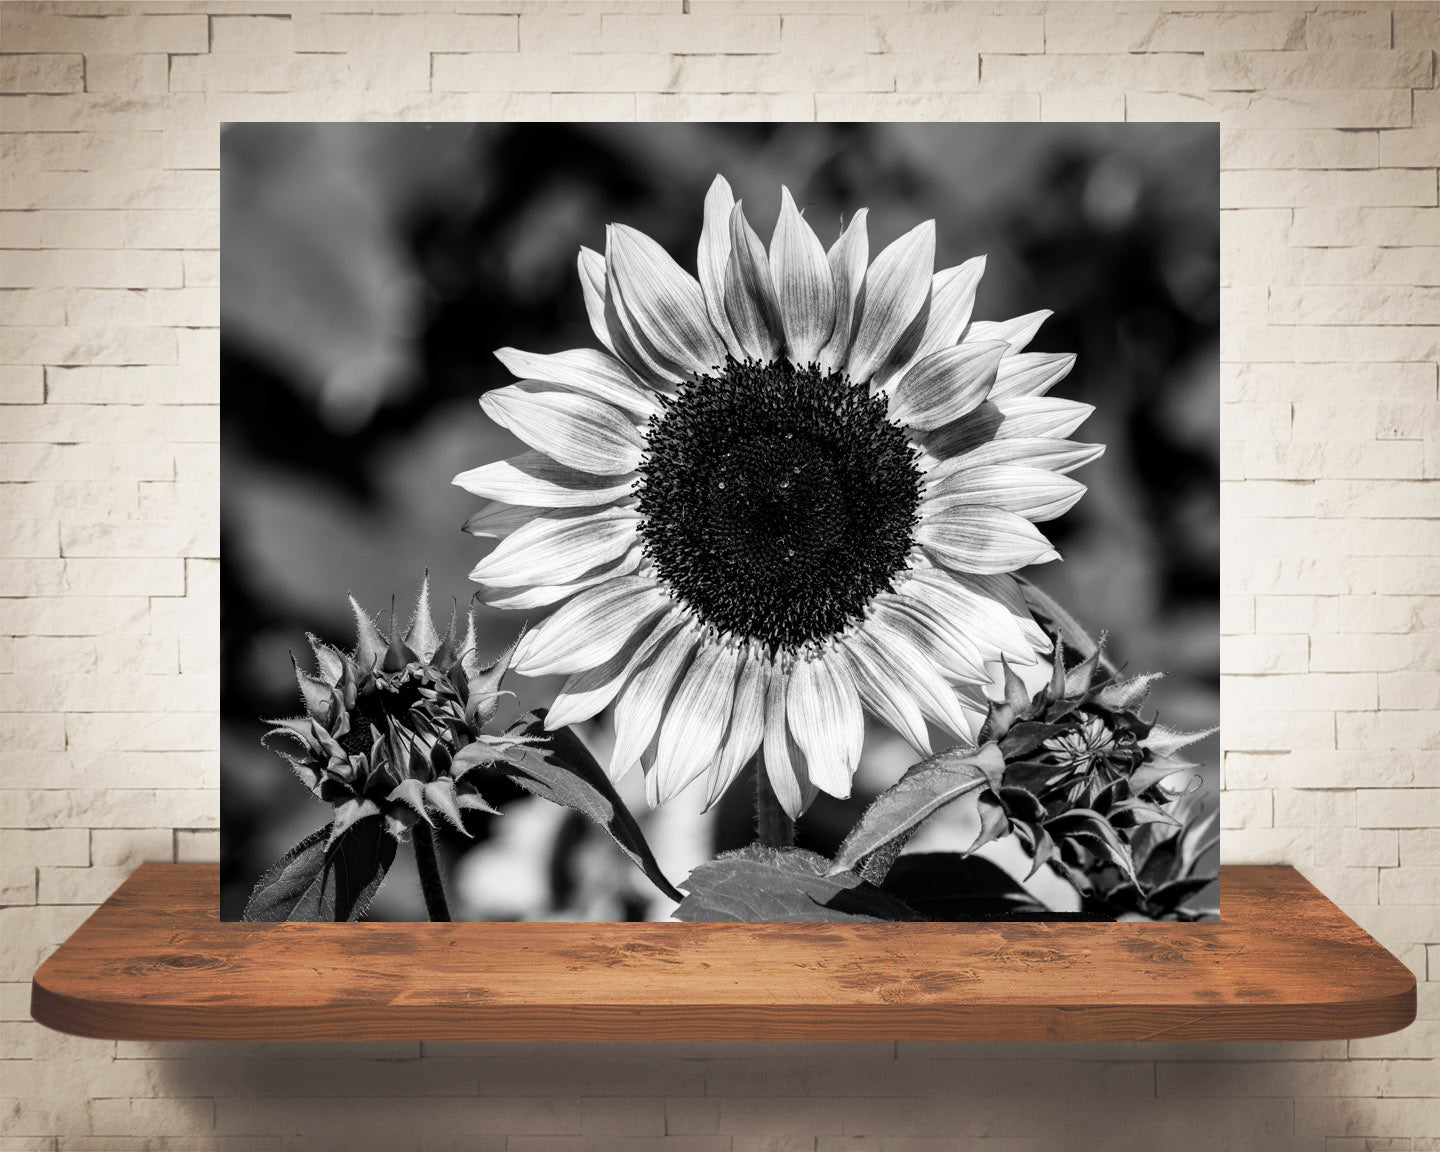 Pink Sunflower Photograph Black White